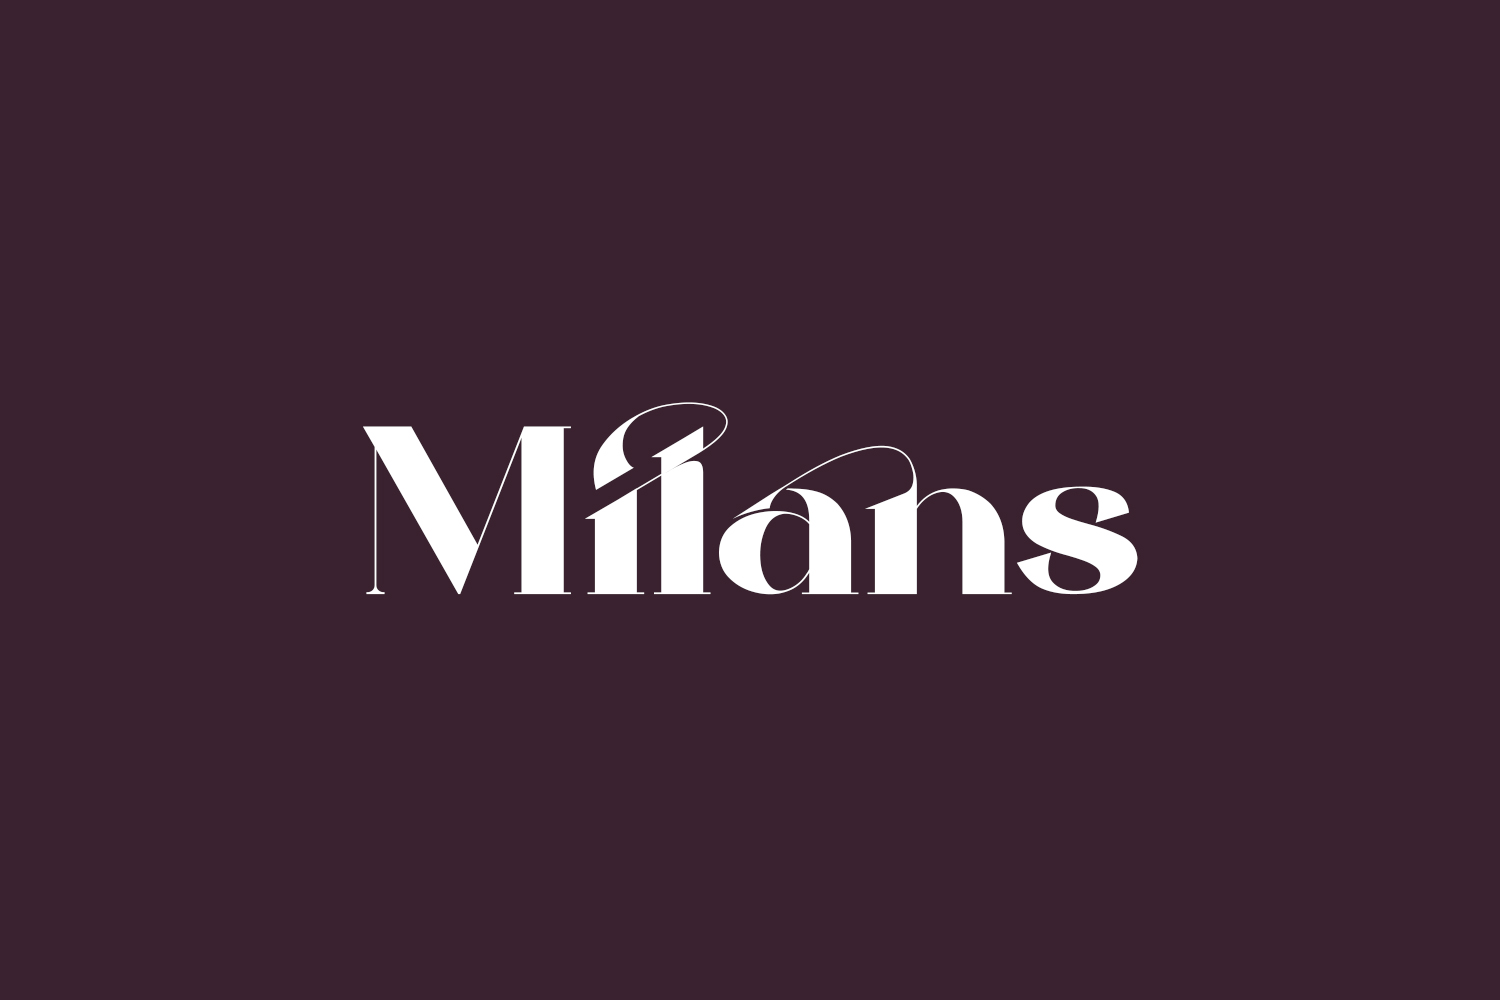 Milans Free Font